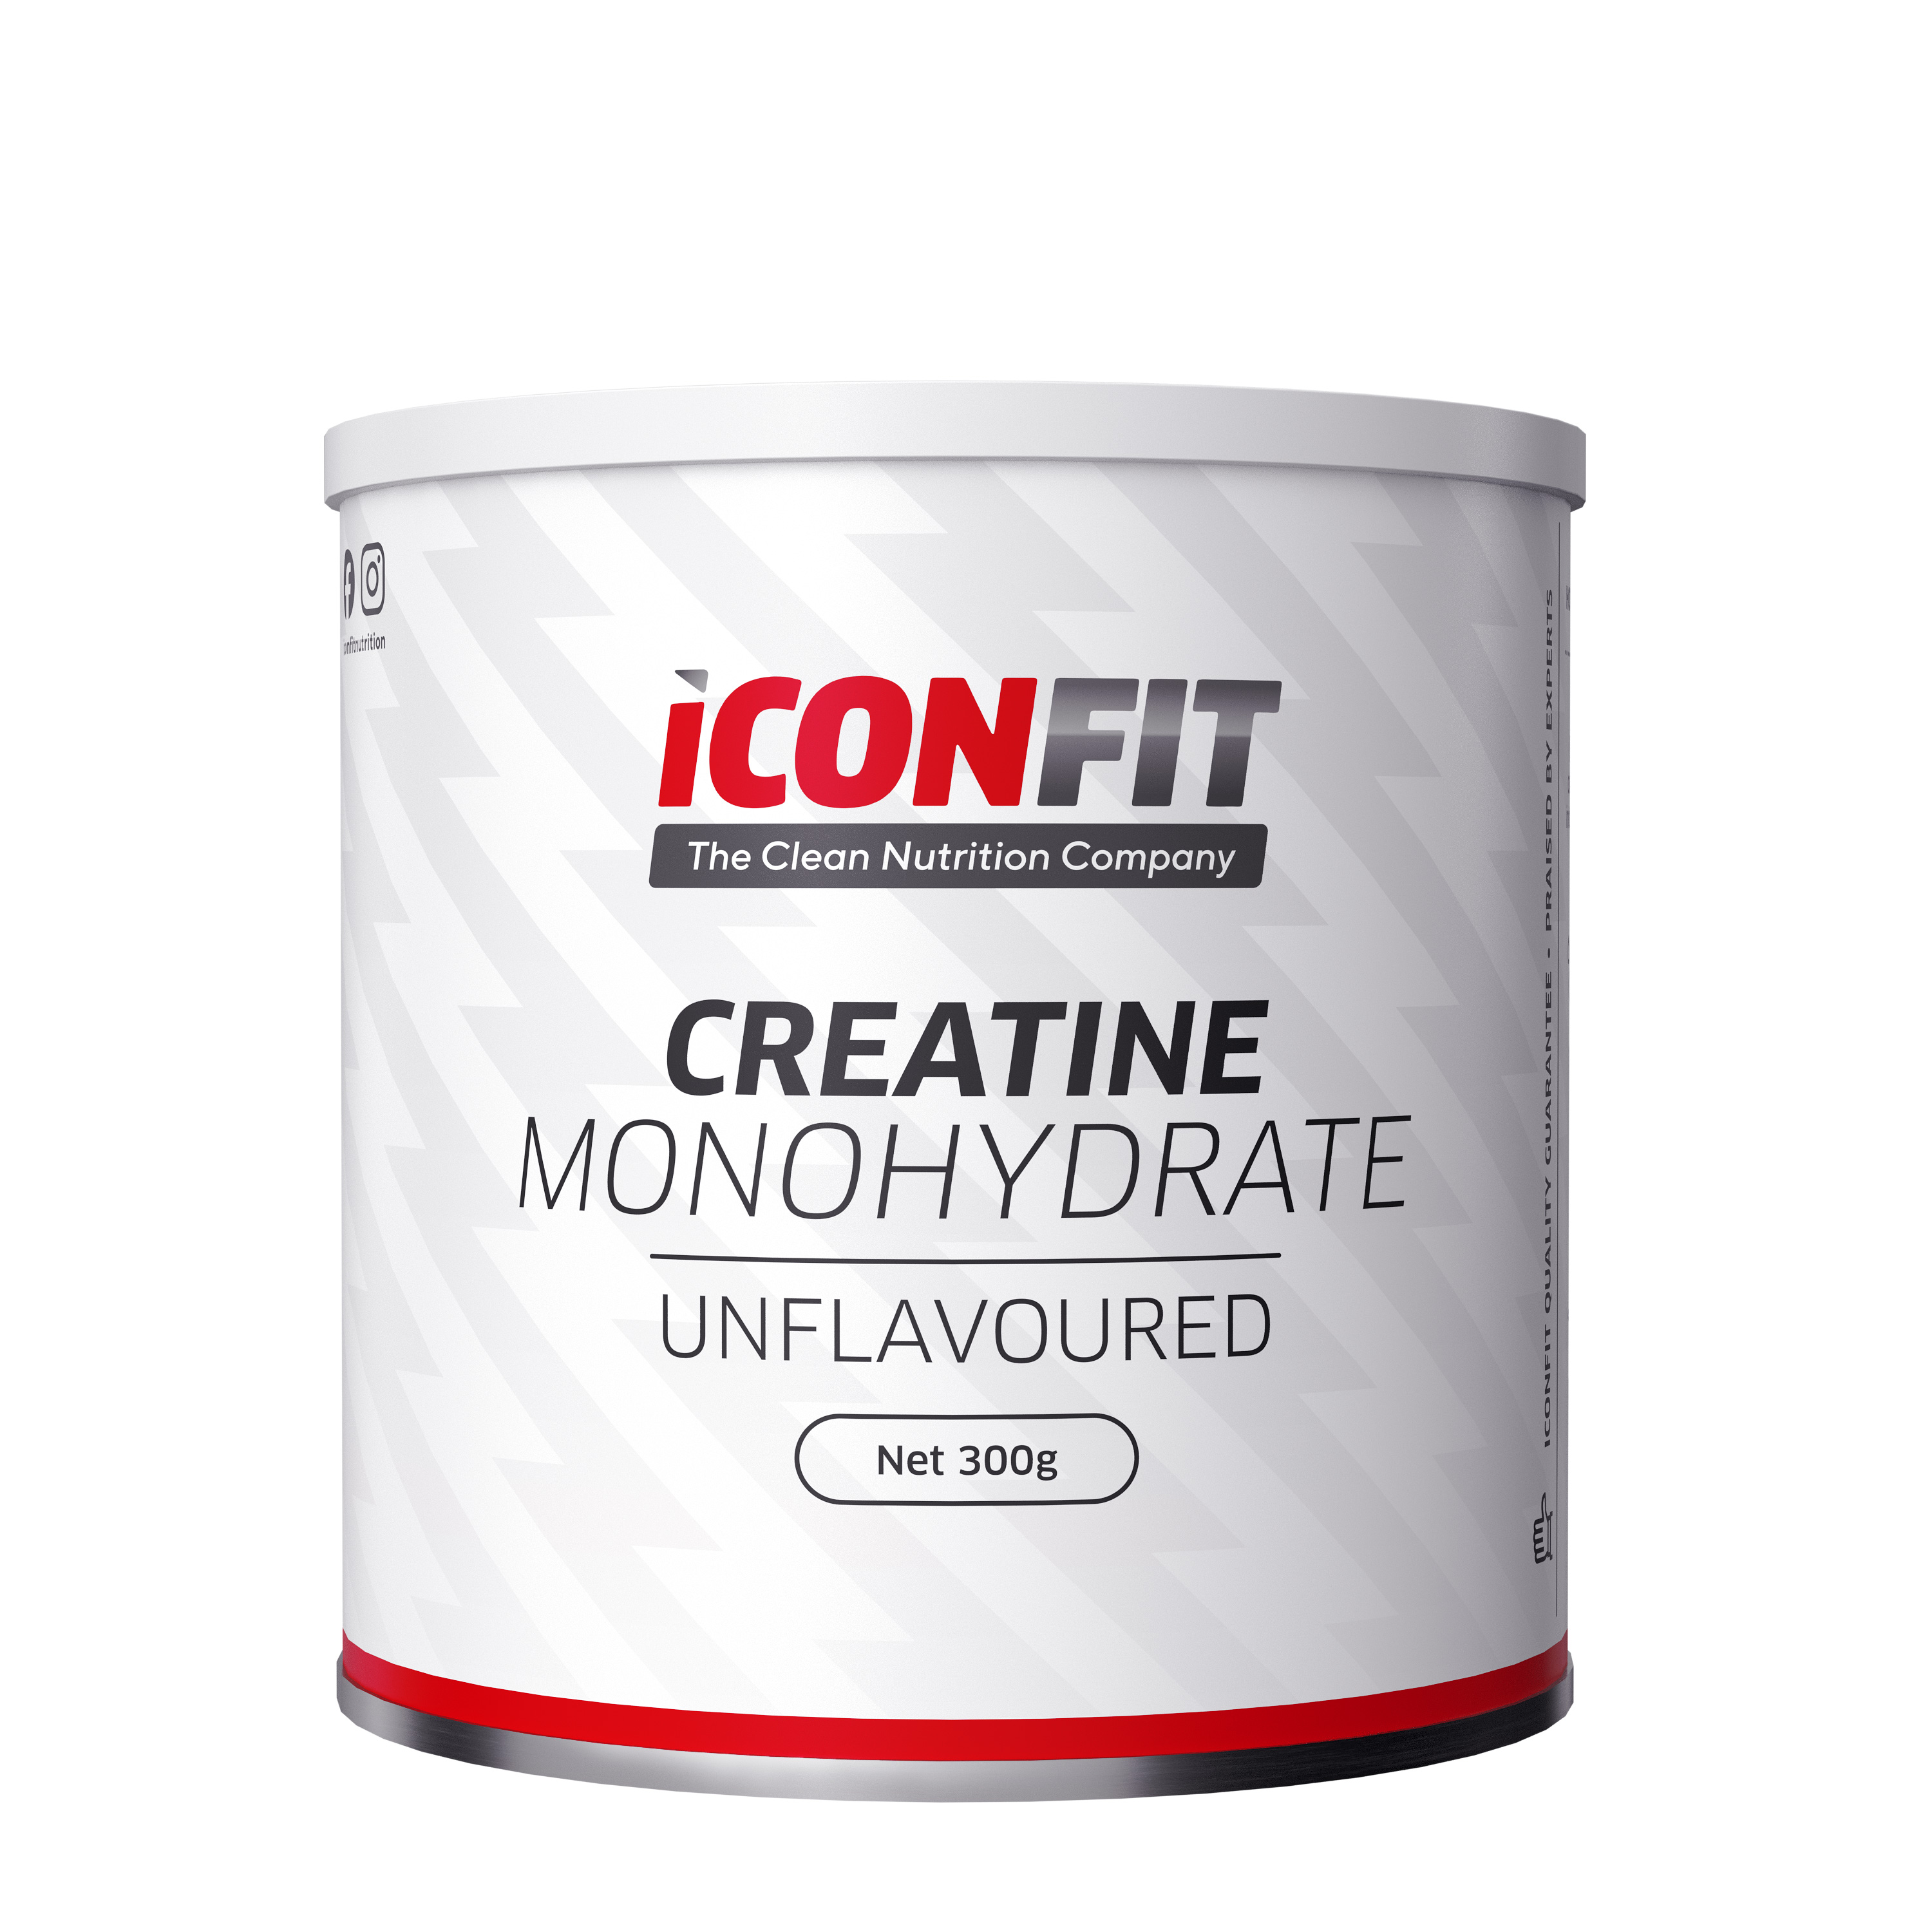 ICONFIT-Micronised-Creatine-Monohydrate-300g (2)